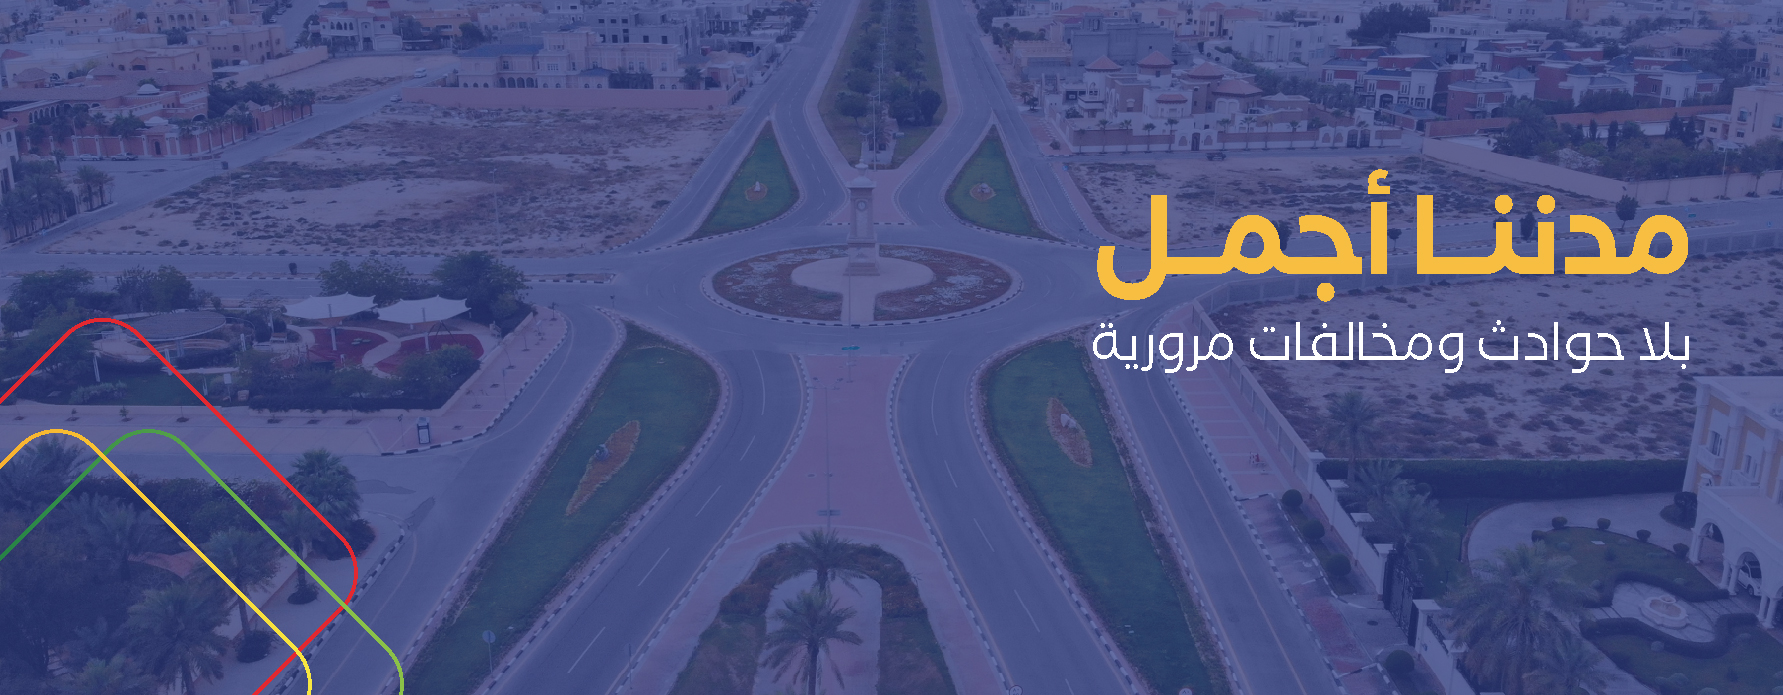 Saudi Traffic Safety Association